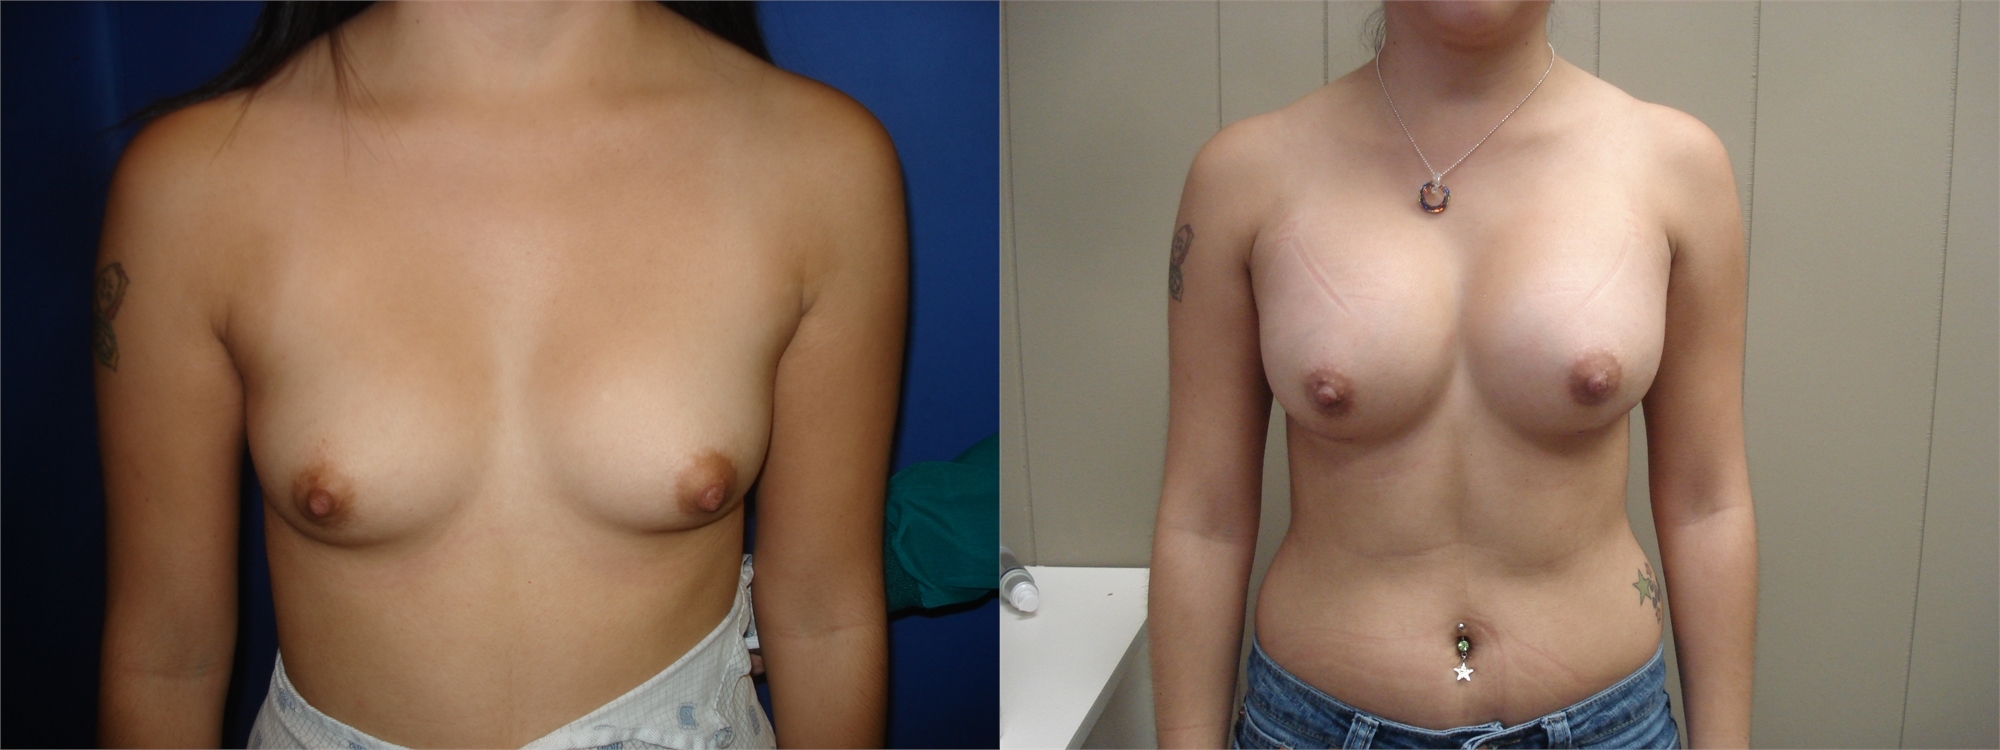 Before Breast Augmentation Surgery Photo Seattle and Tacoma, WA